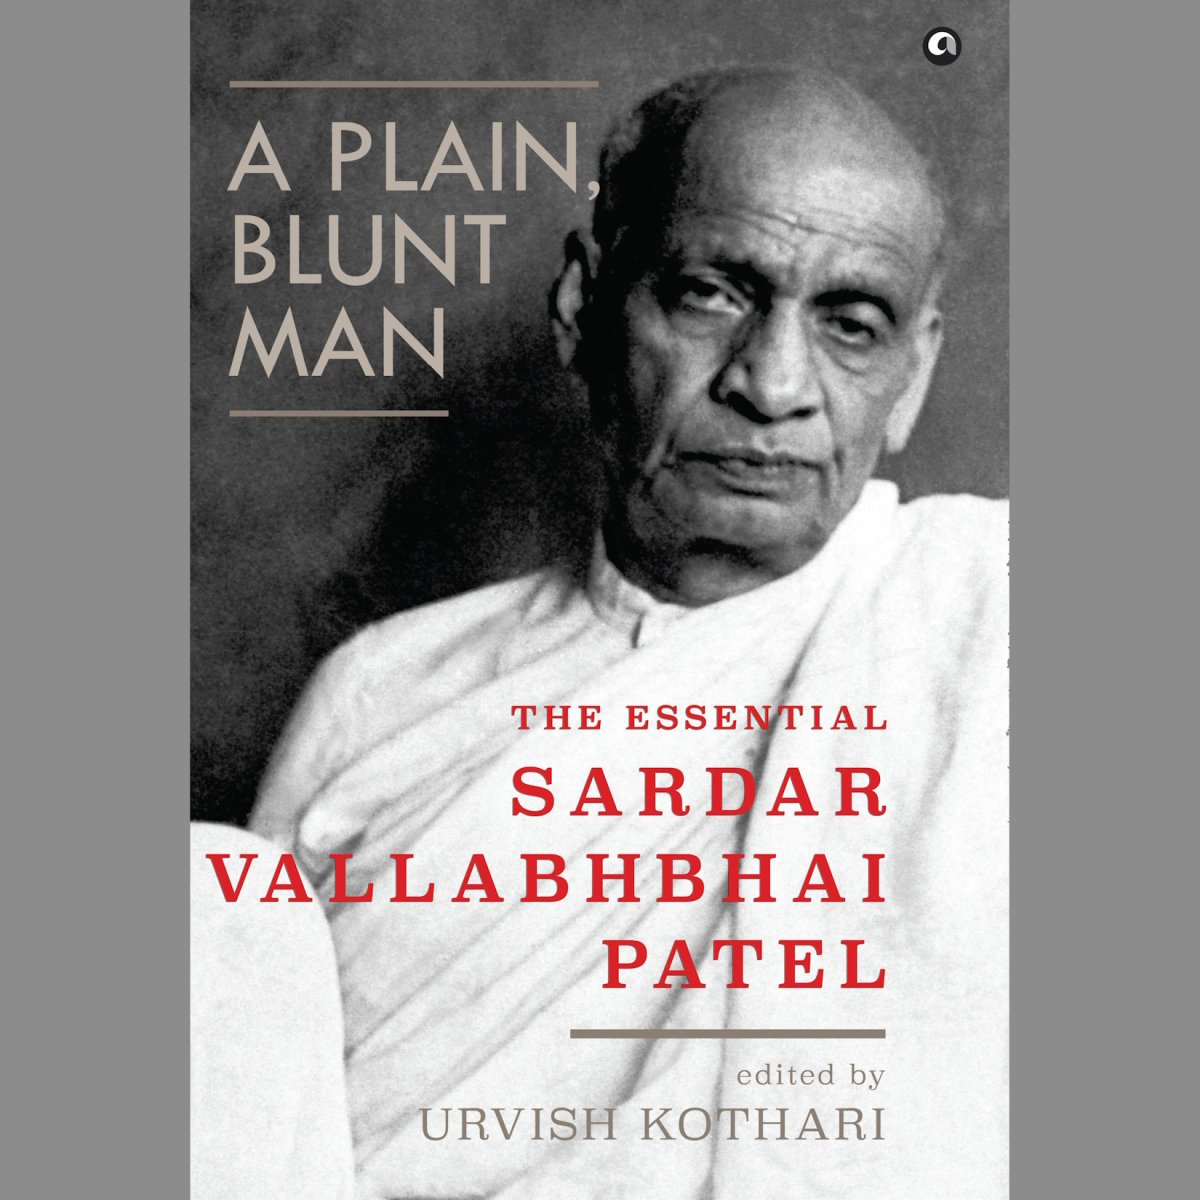 An excerpt from A Plain, Blunt Man: The Essential Sardar Vallabhbhai Patel